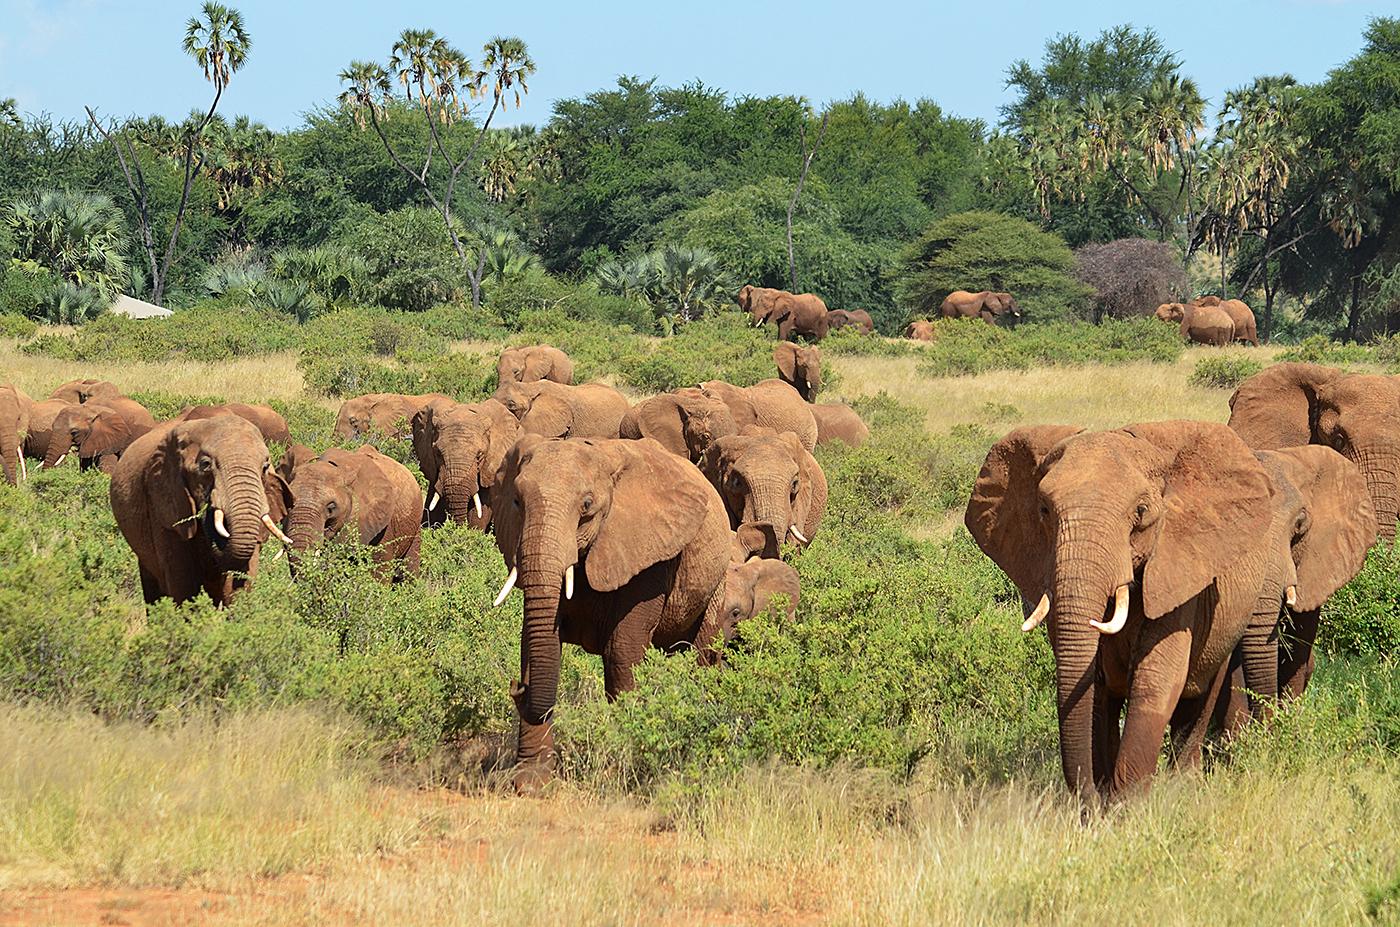 A large herd of elephants in Samburu National Park, Kenya. Photo: BBC/Scott Alexander